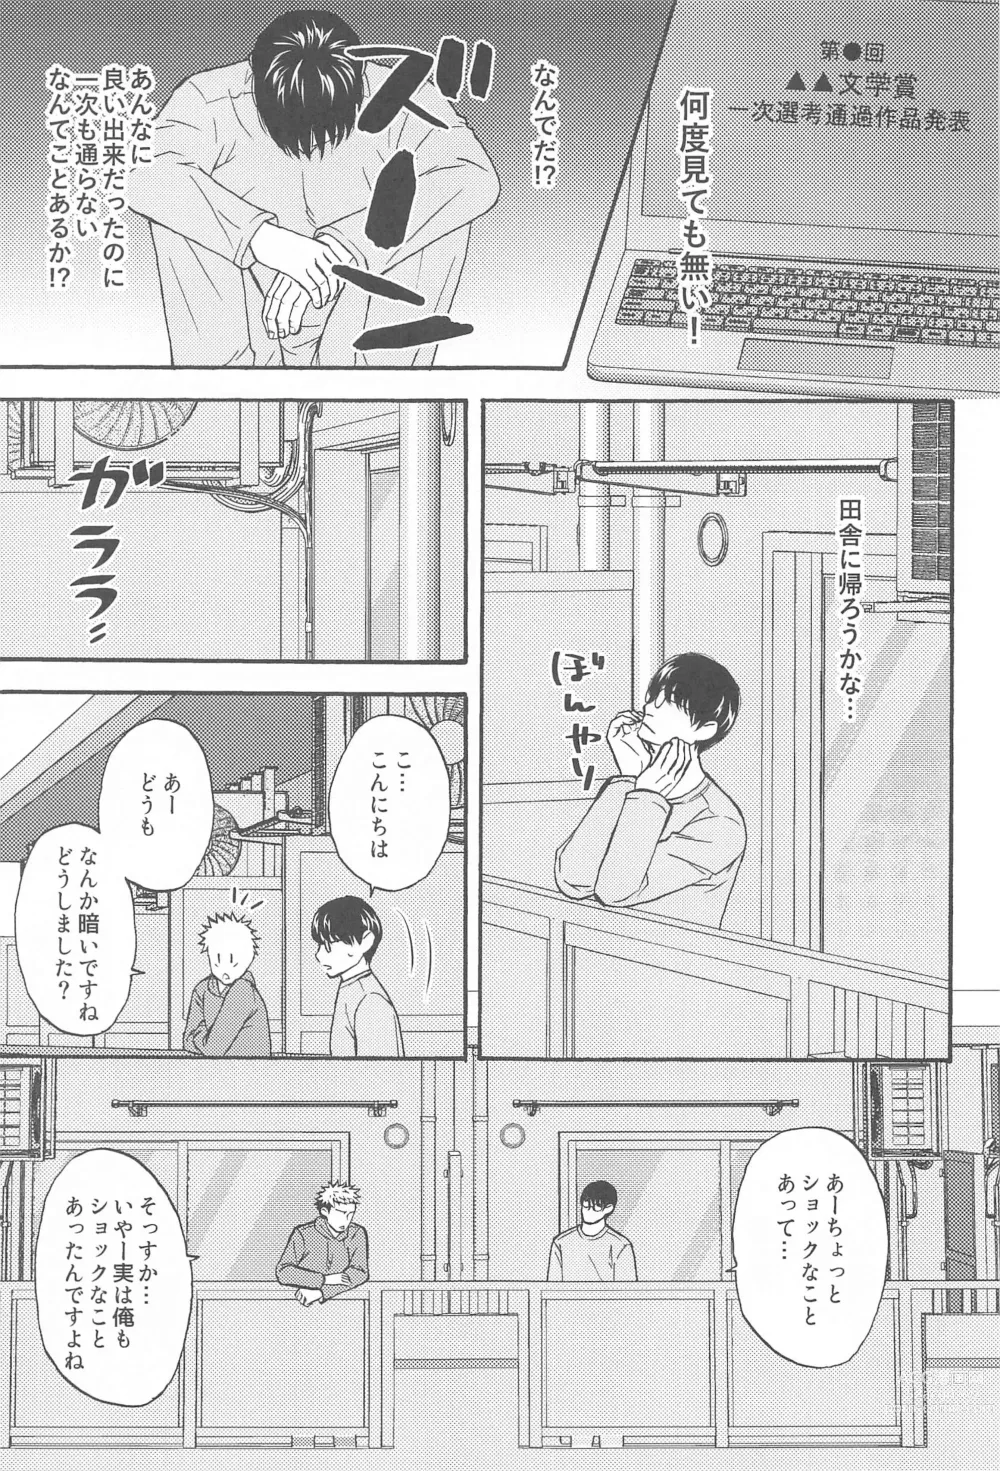 Page 12 of doujinshi Subarashii Hibi